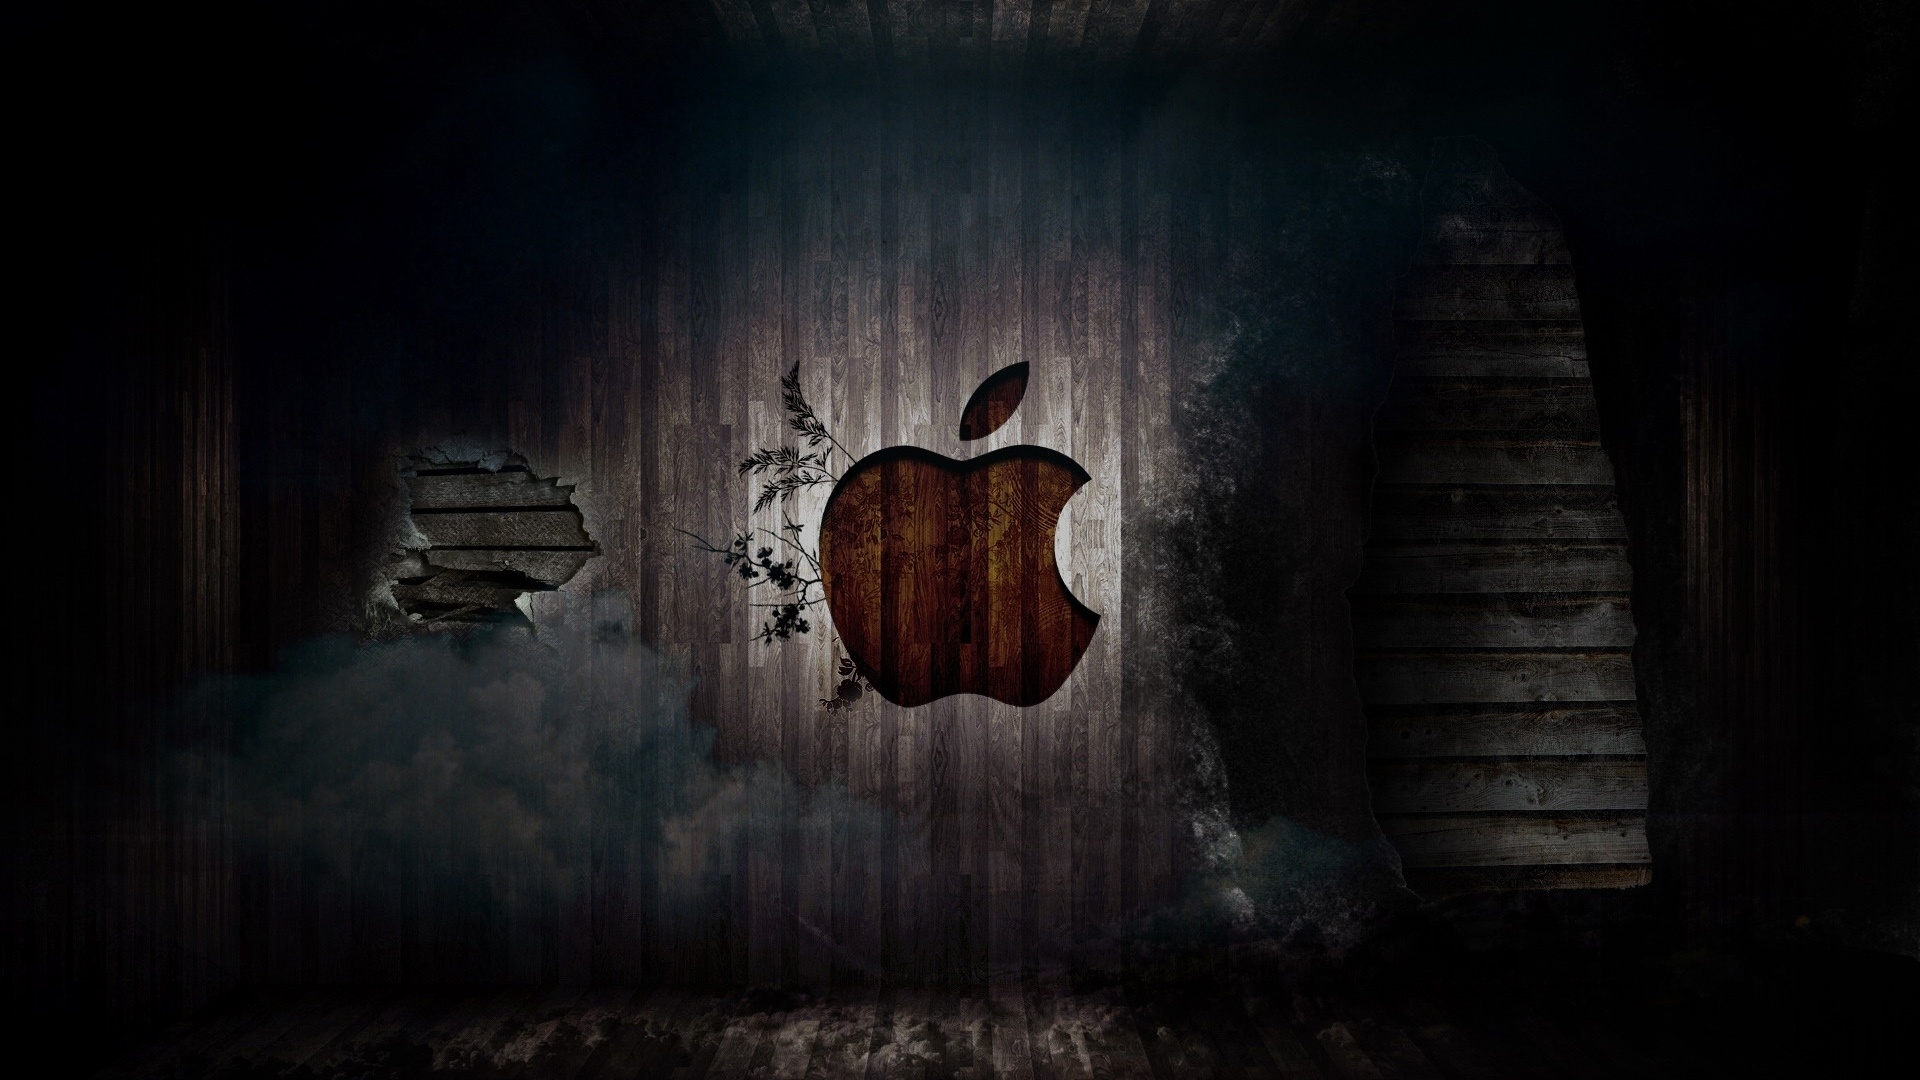 Descarga gratuita de fondo de pantalla para móvil de Manzana, Tecnología, Apple Inc.